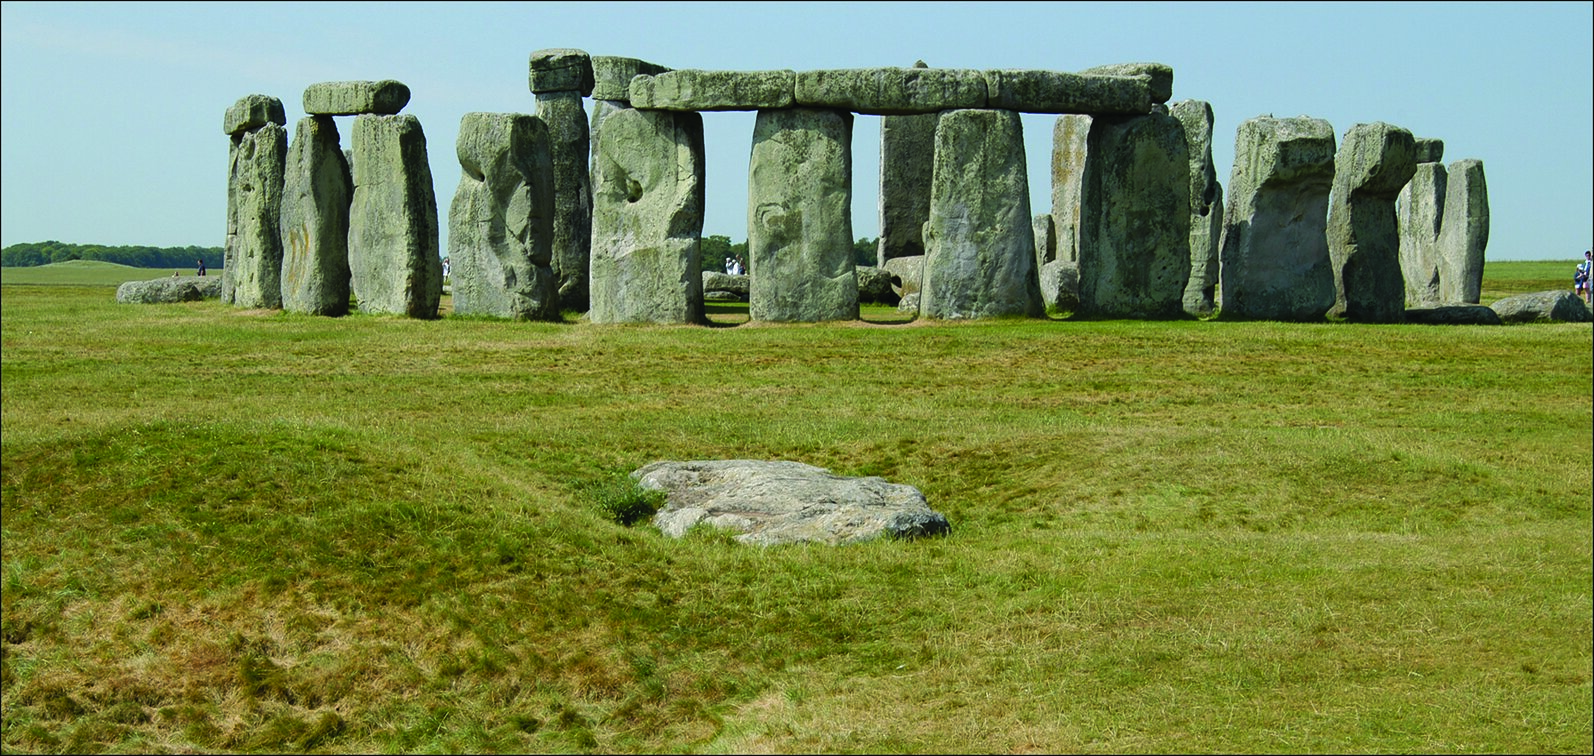 #Stonehenge served as an ancient solar calendar: New analysis